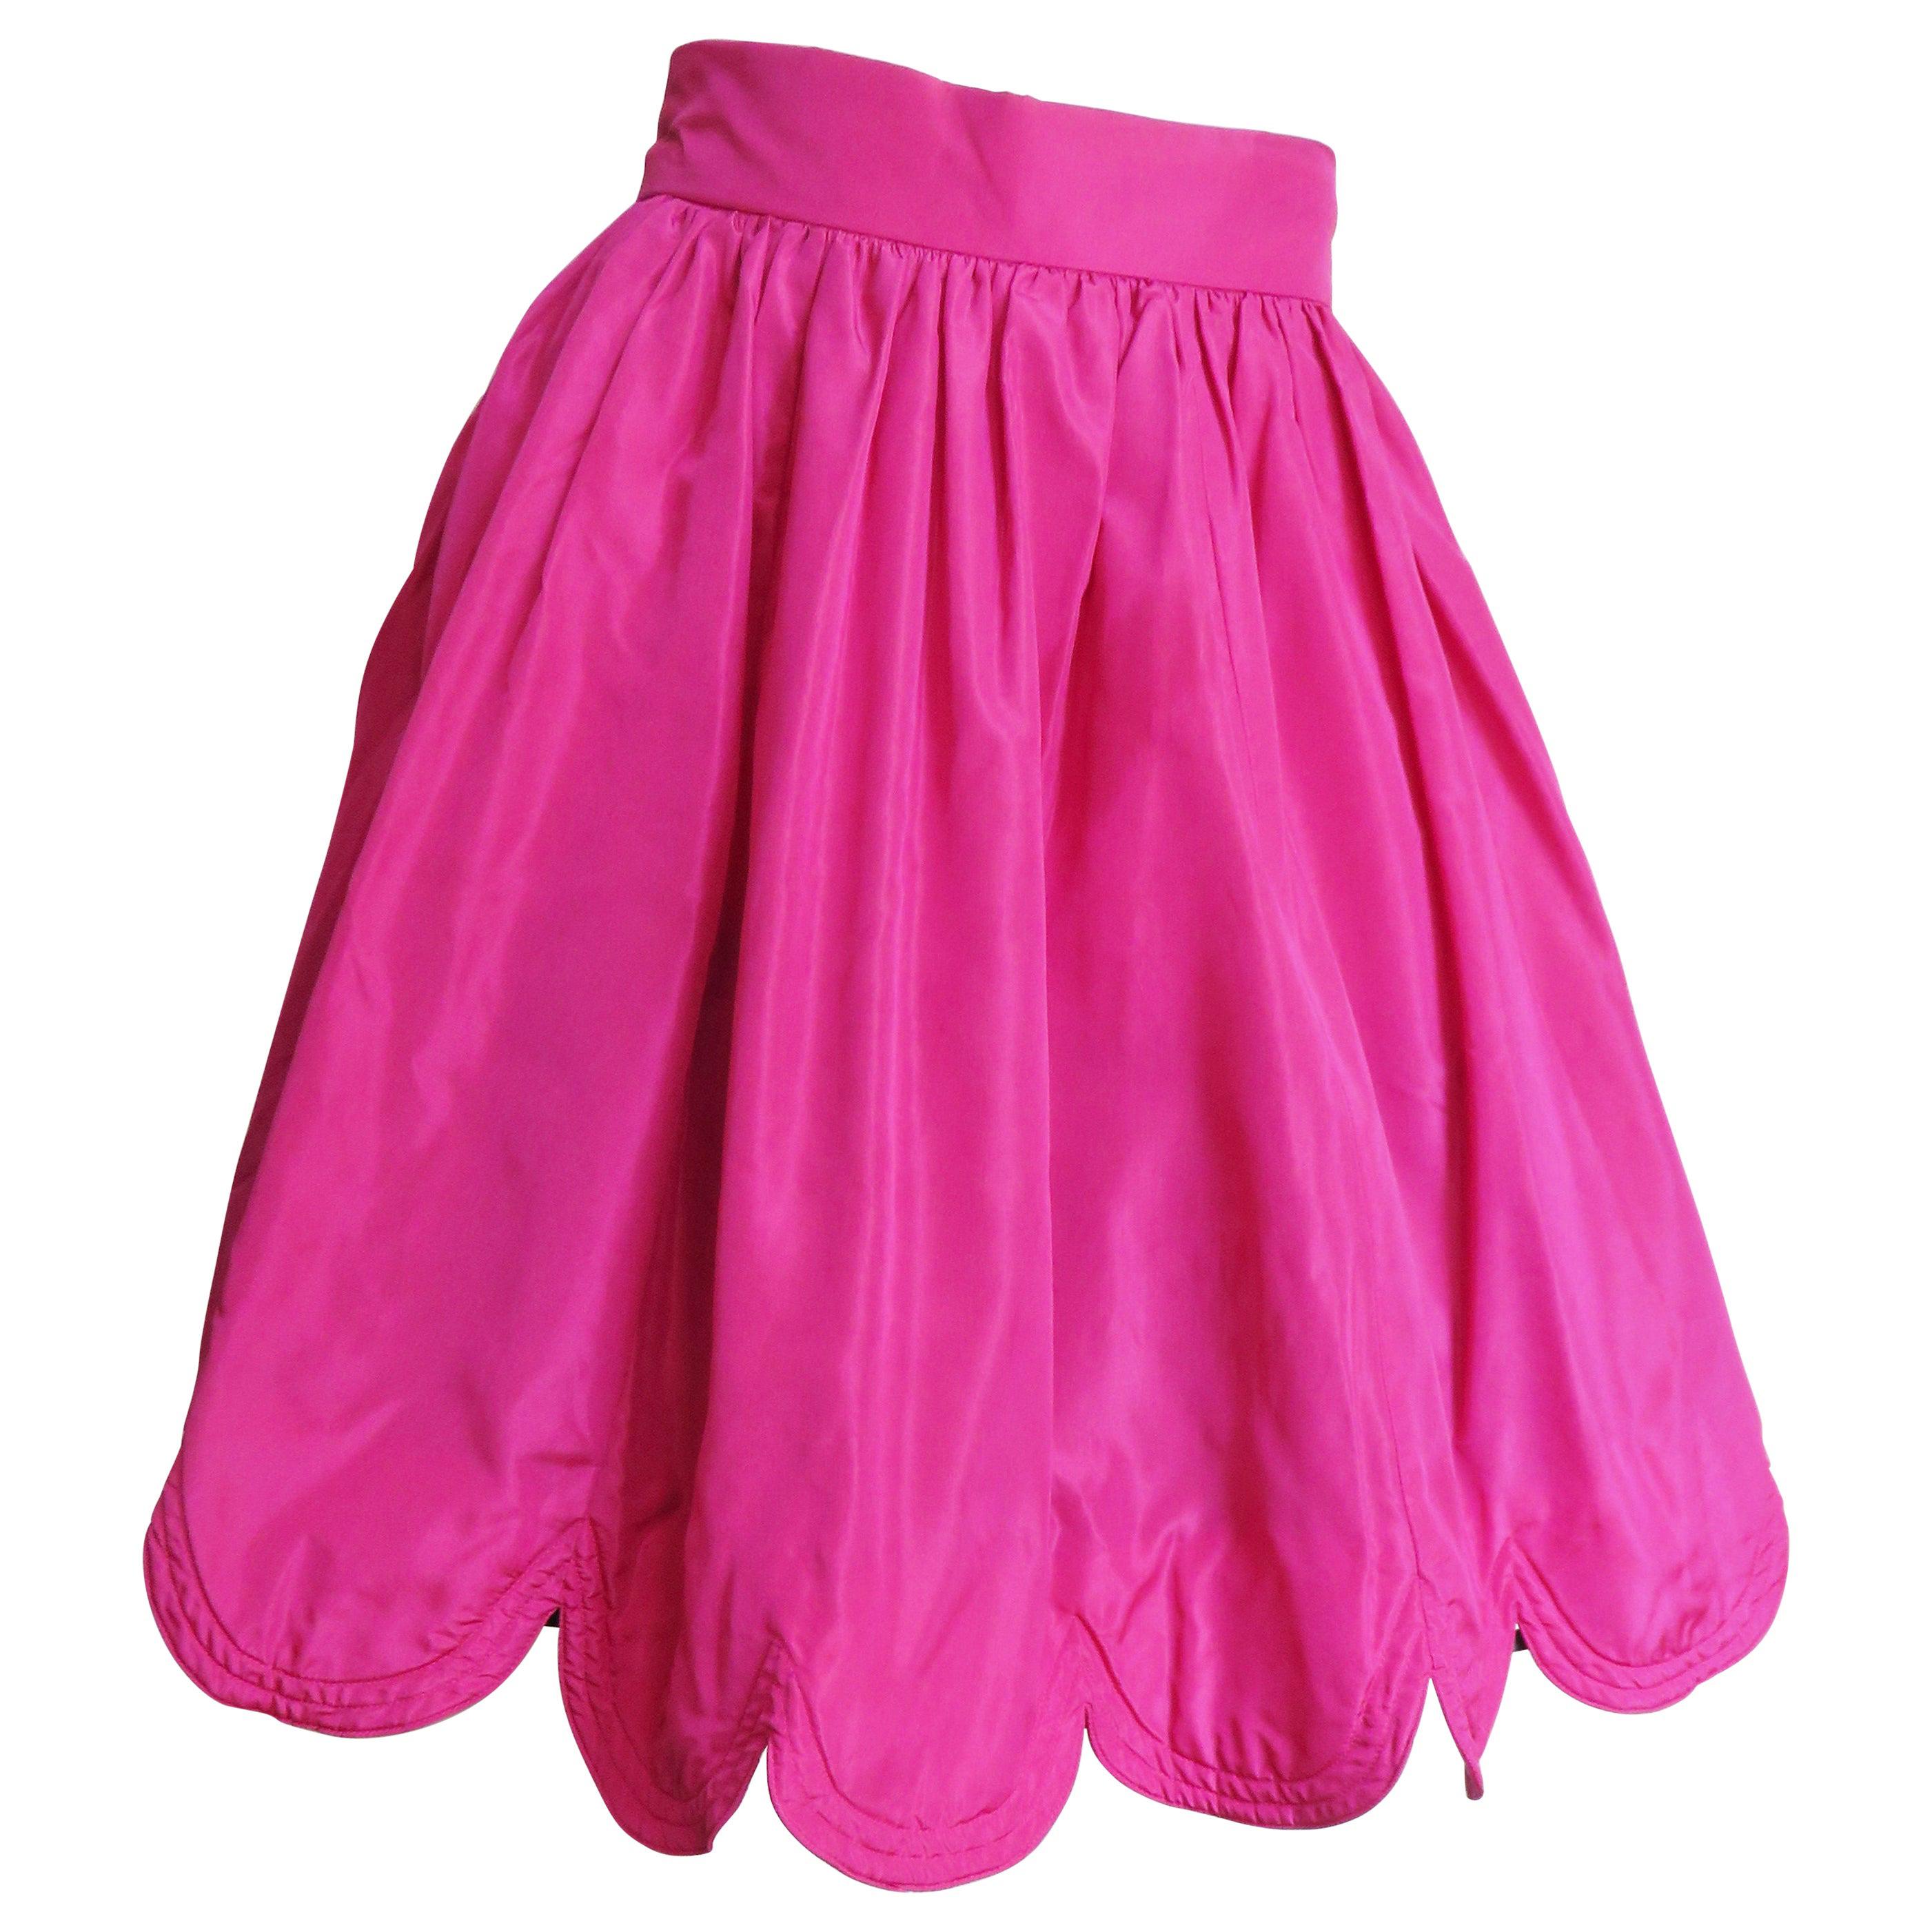 Ella Singh New Silk Full Skirt with Scallop Hem